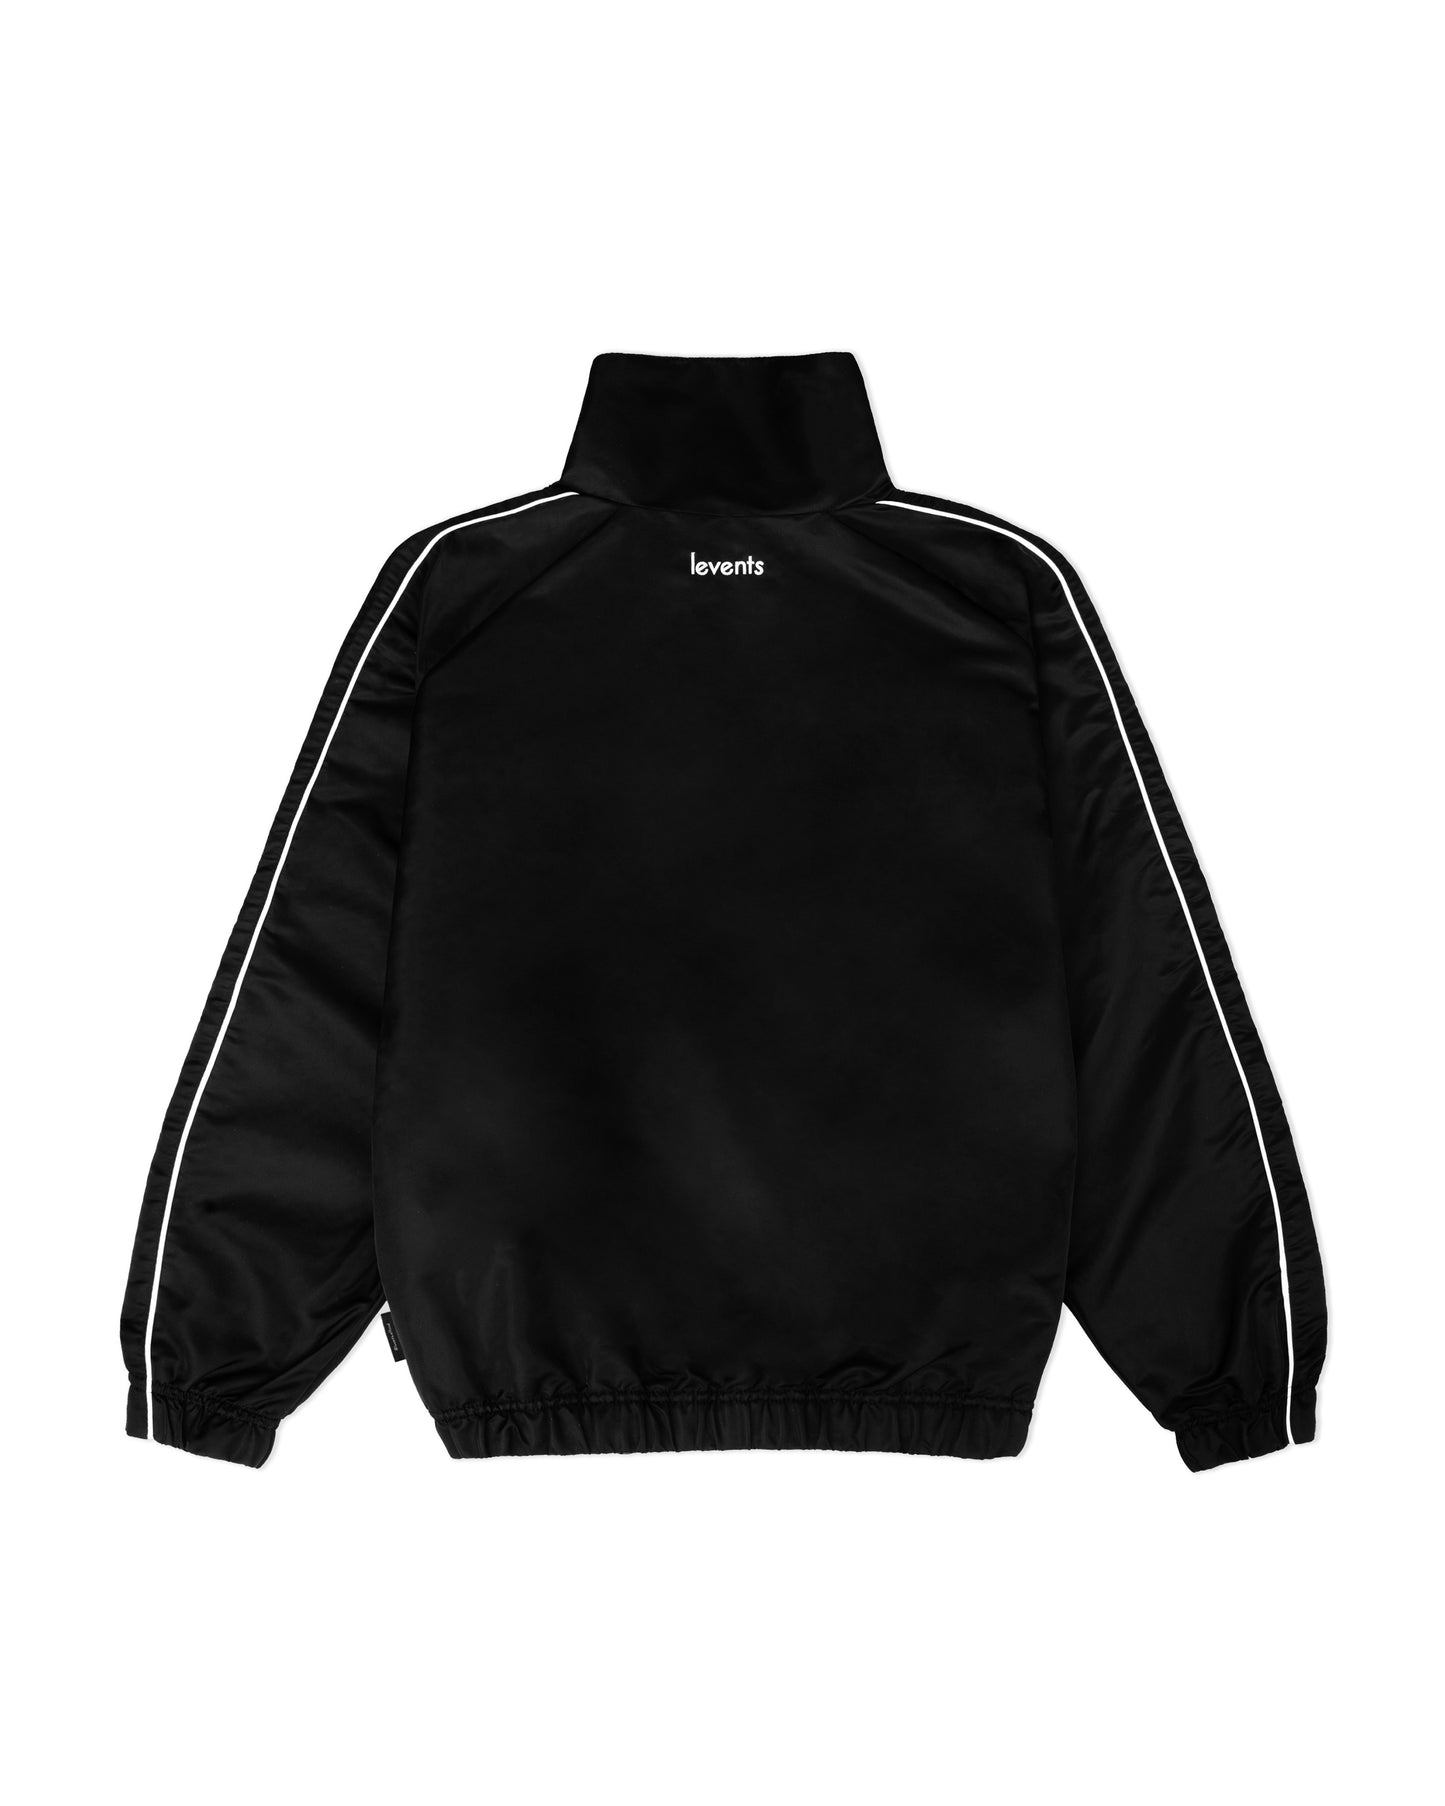 Levents® Line Jacket/ Black